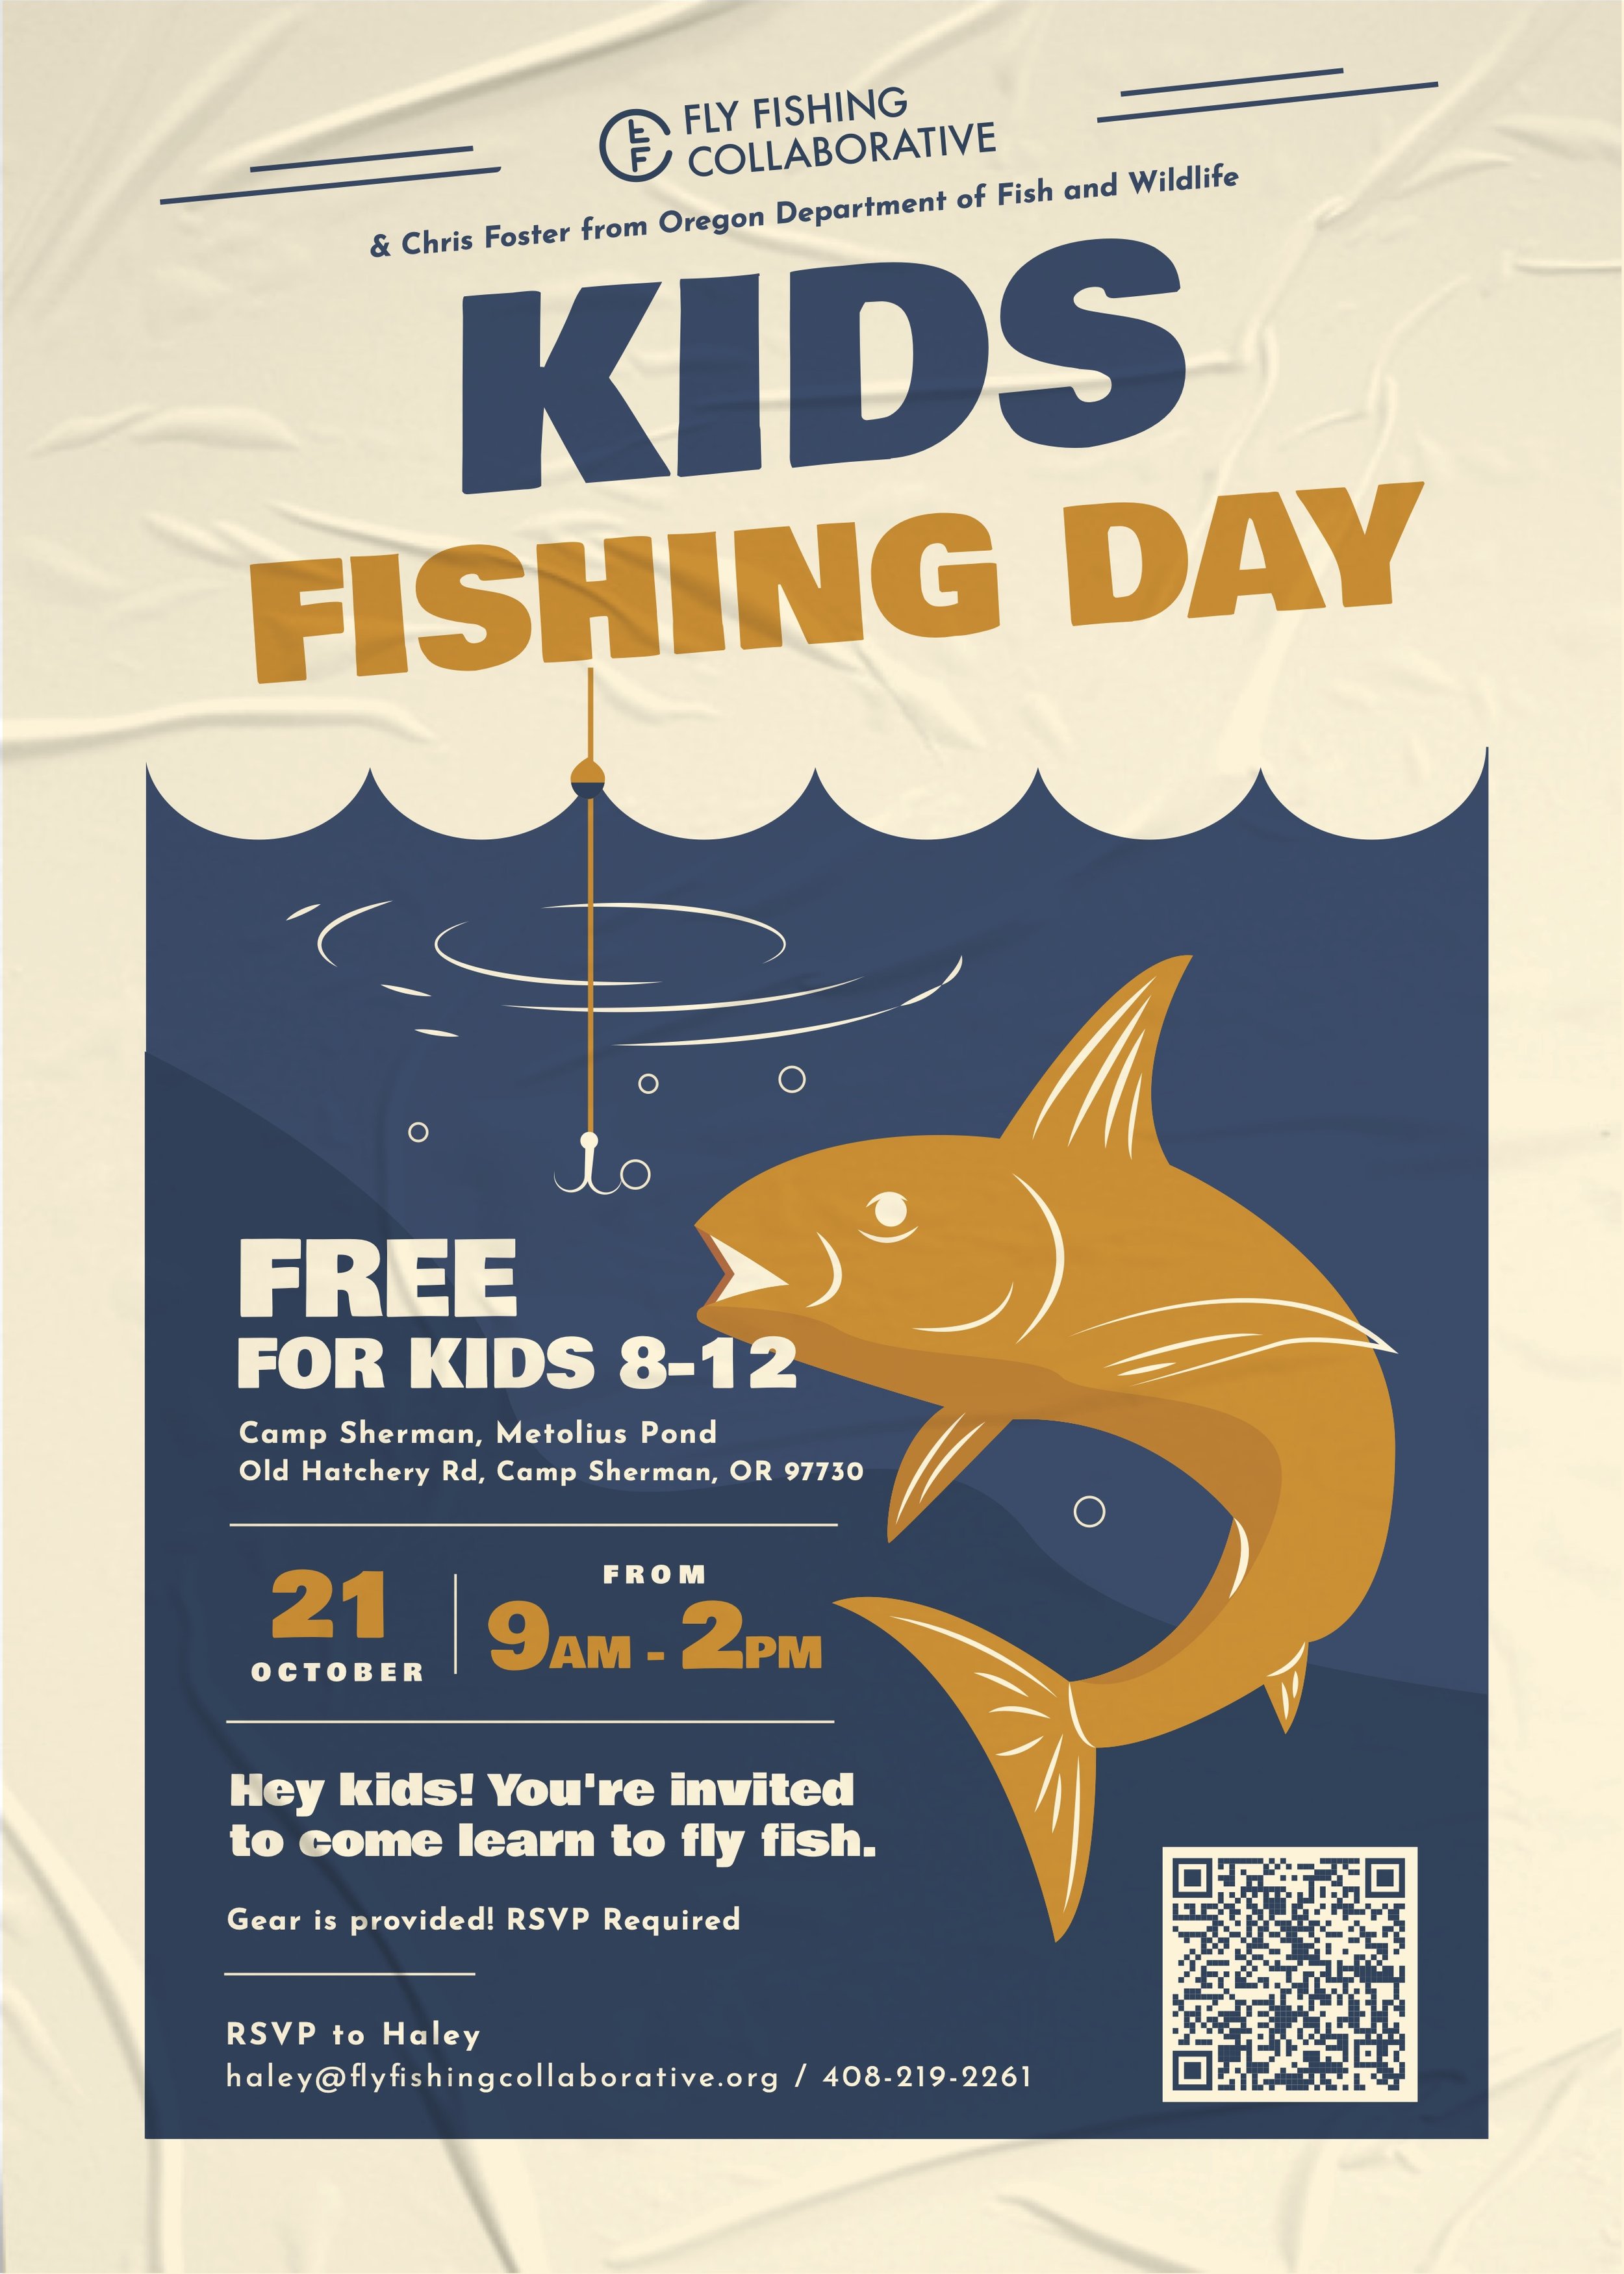 Upcoming Kids Fishing Day! — Fly Fishing Collaborative